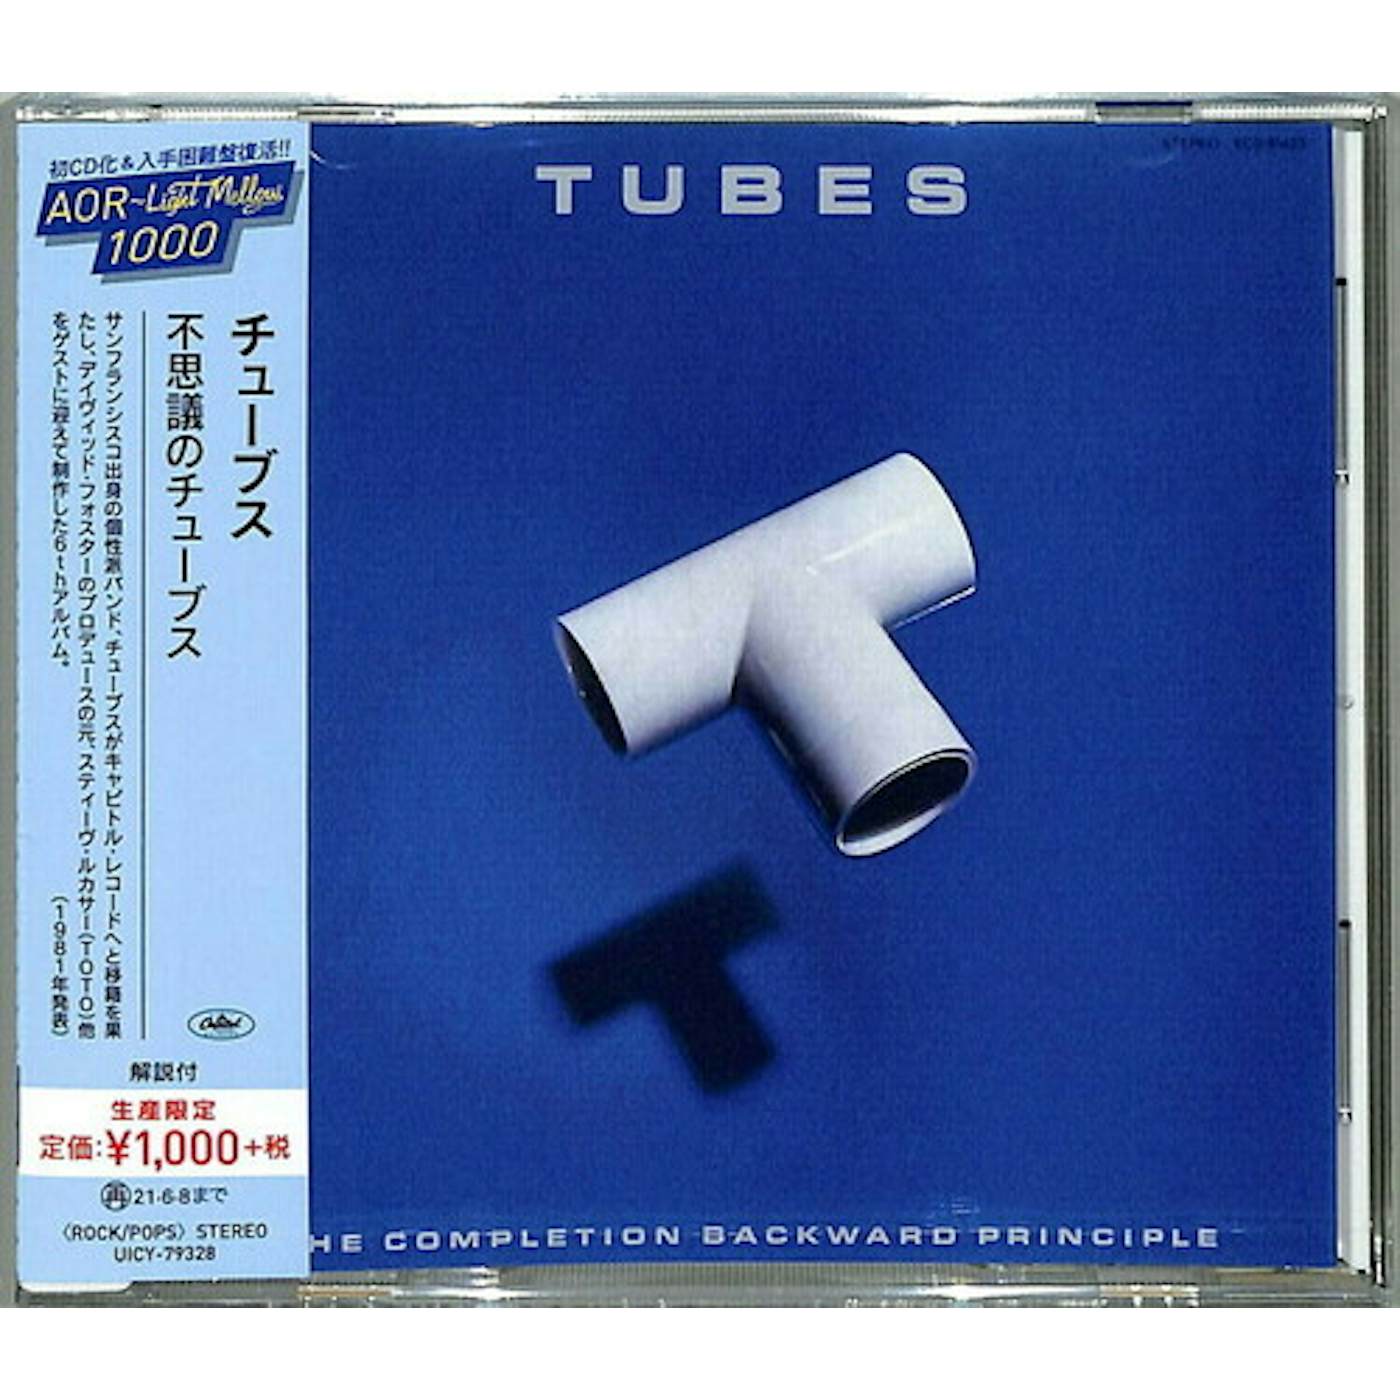 Tubes COMPLETION BACKWARD PRINCIPLE CD